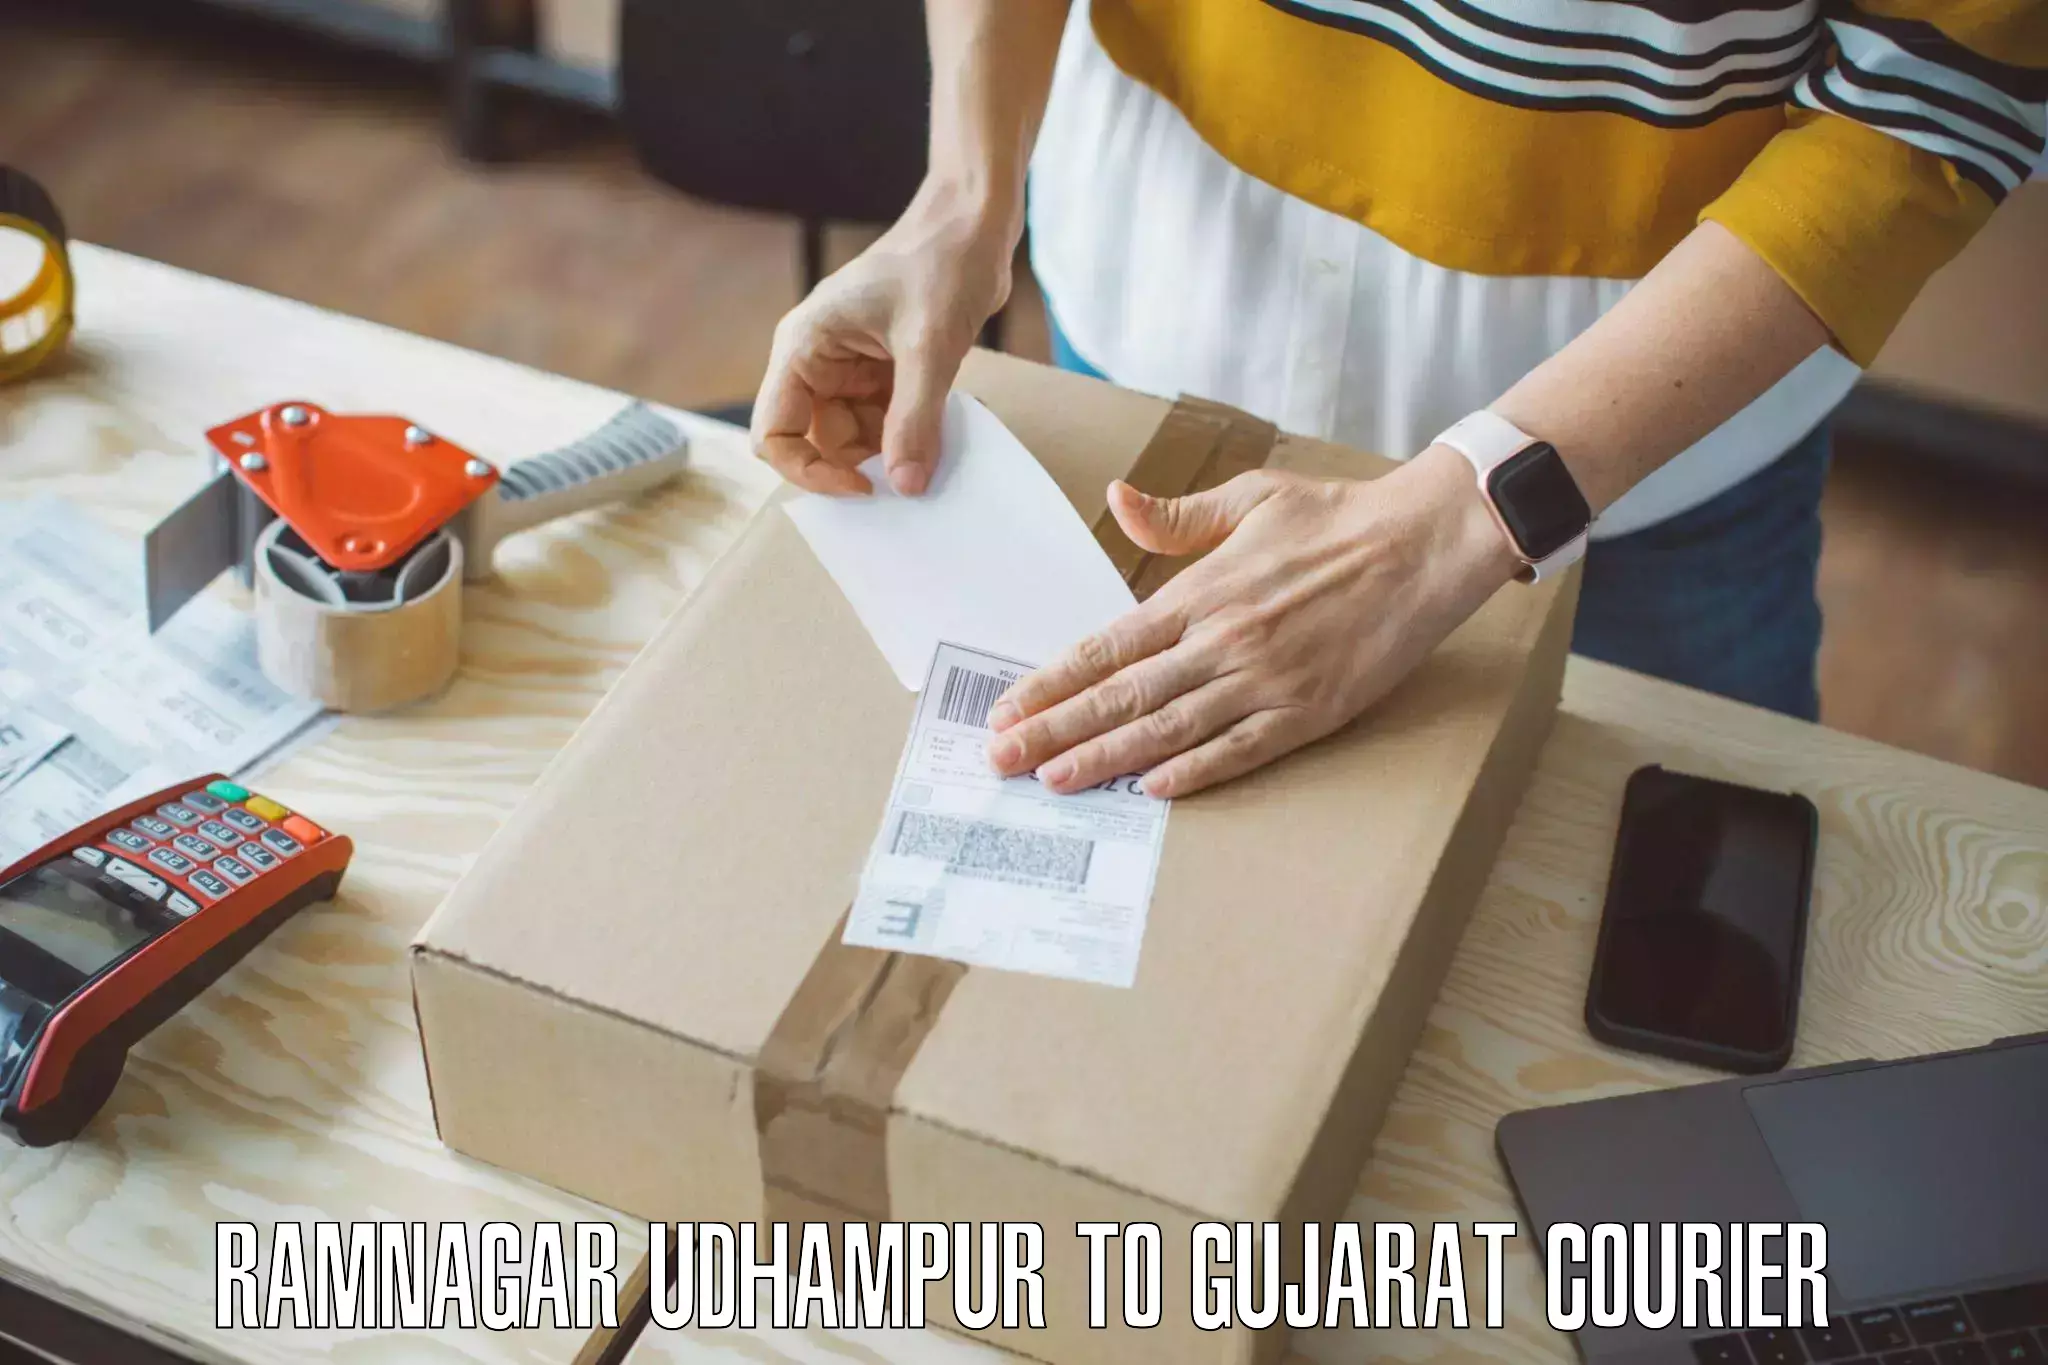 Furniture delivery service Ramnagar Udhampur to Jasdan